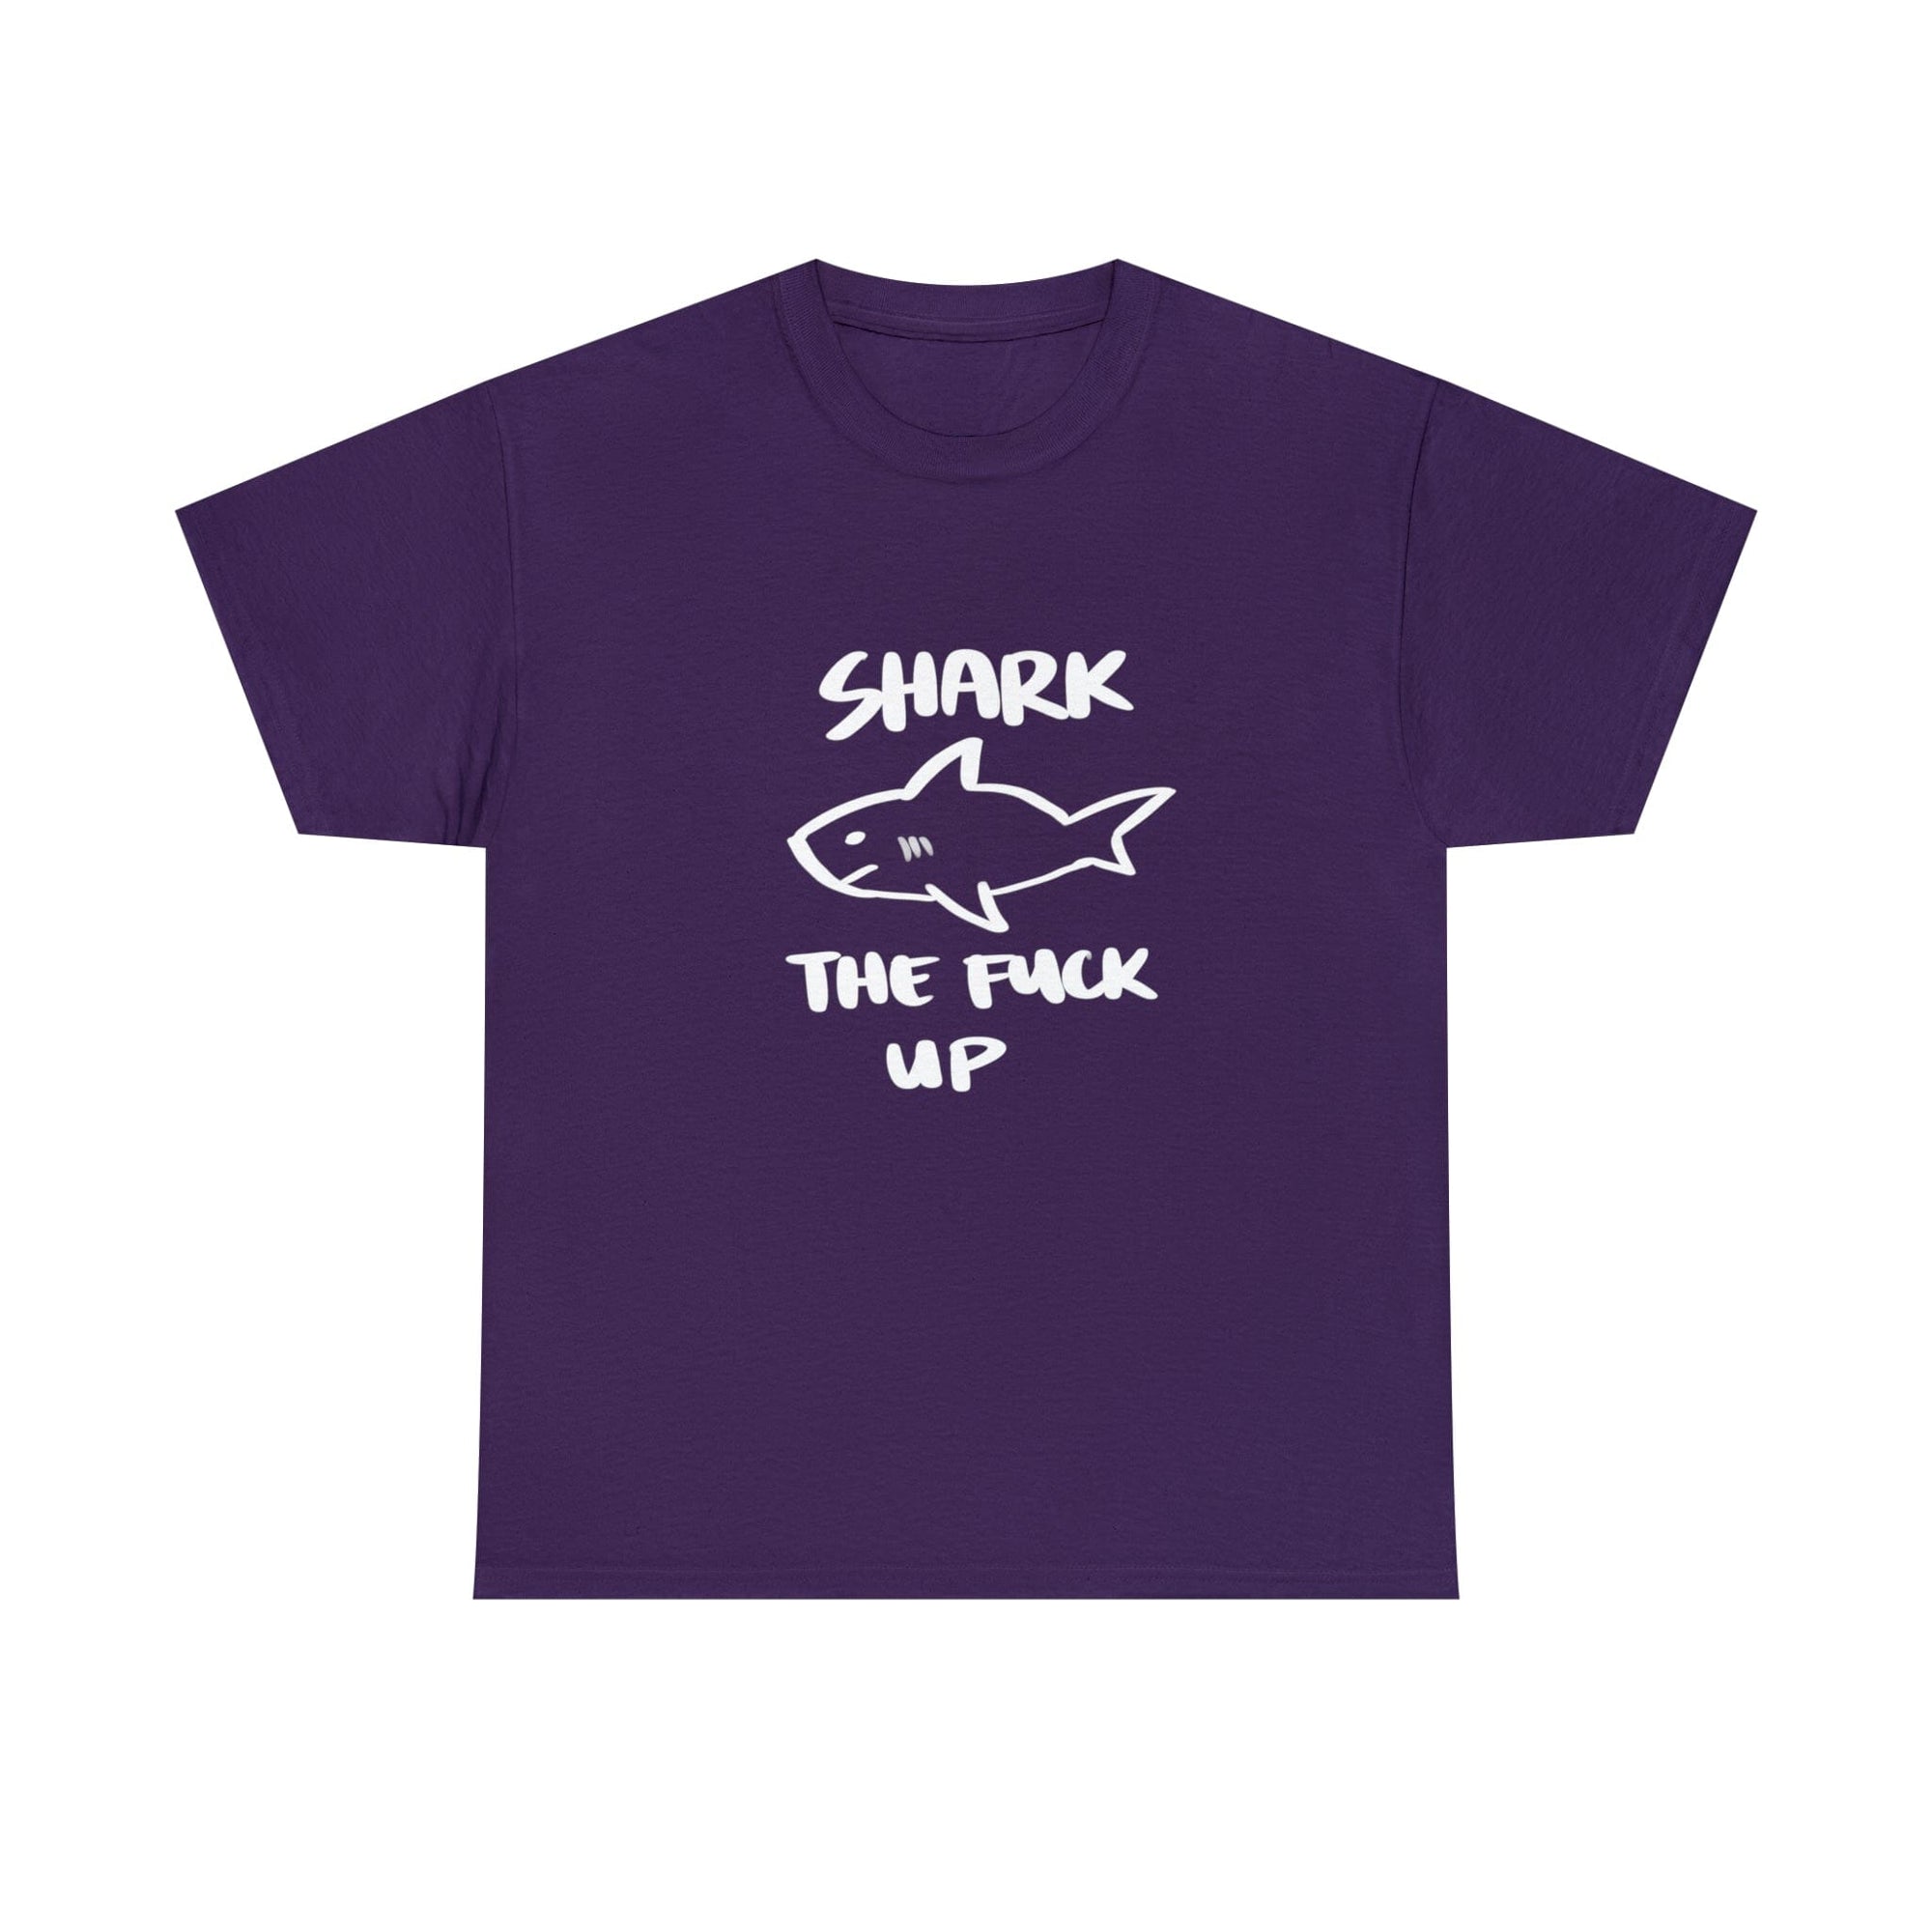 Shark up - T-Shirt T-Shirt Ooka Purple S 